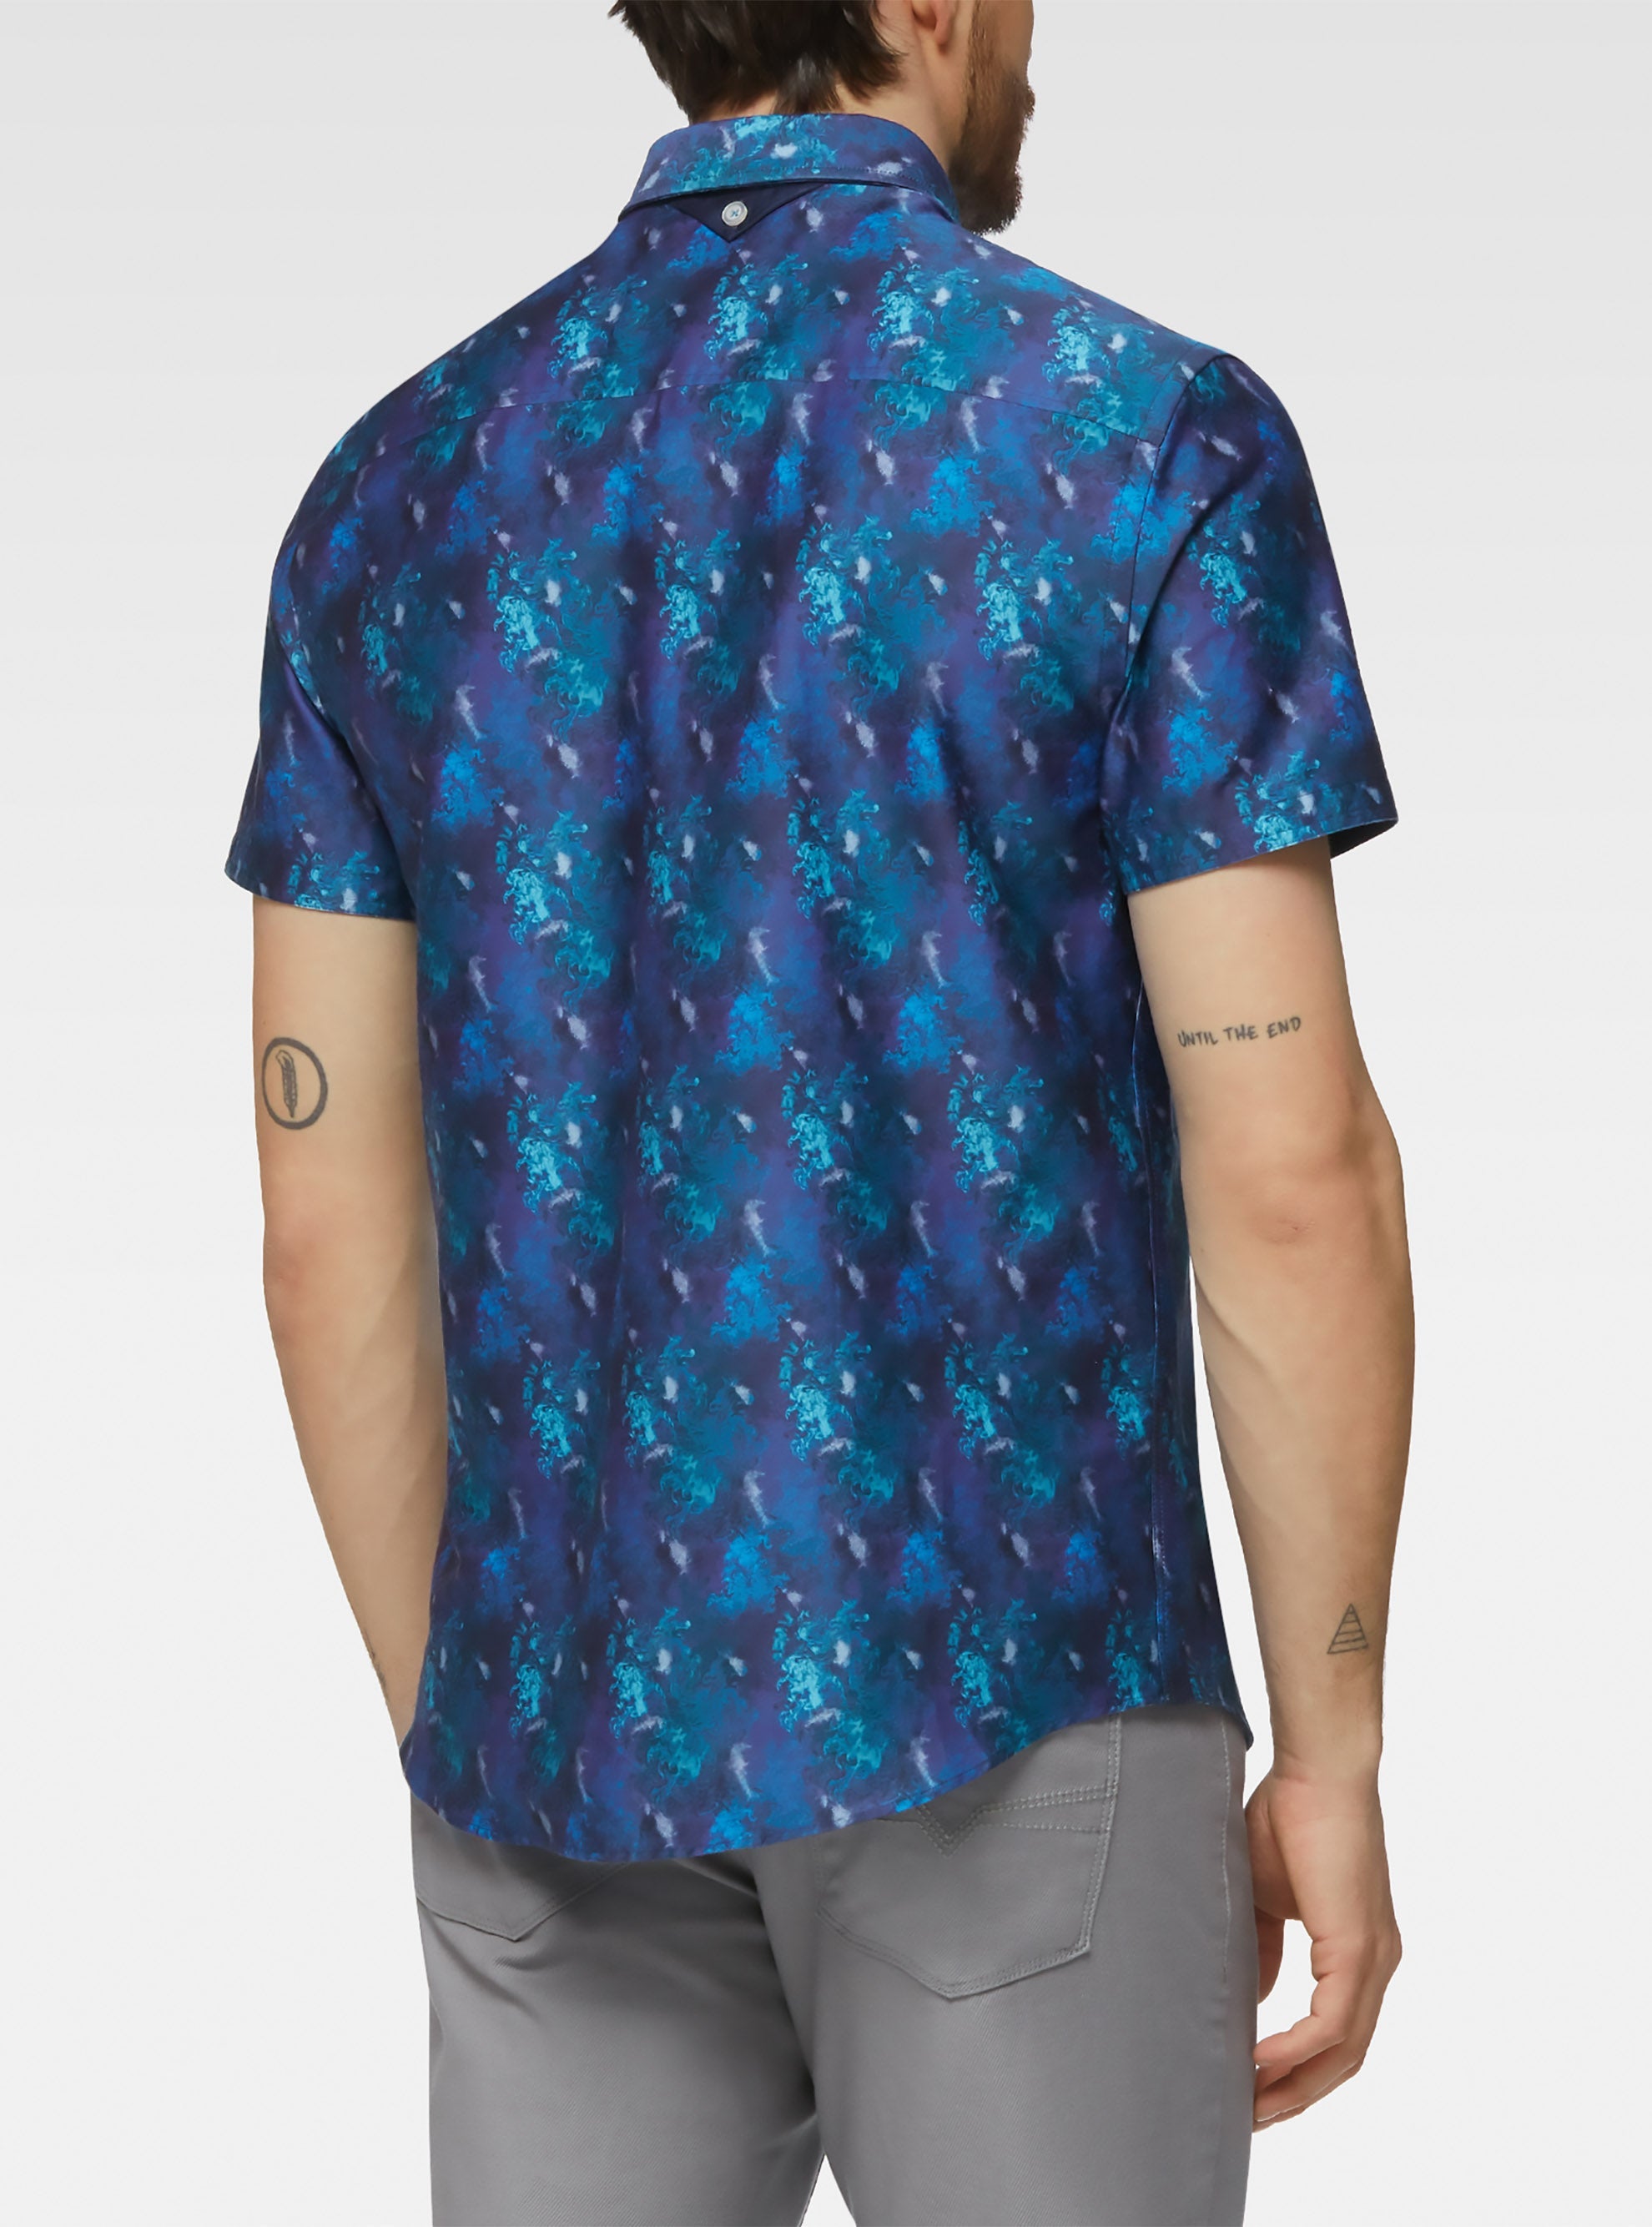 Splatter print short sleeve shirt